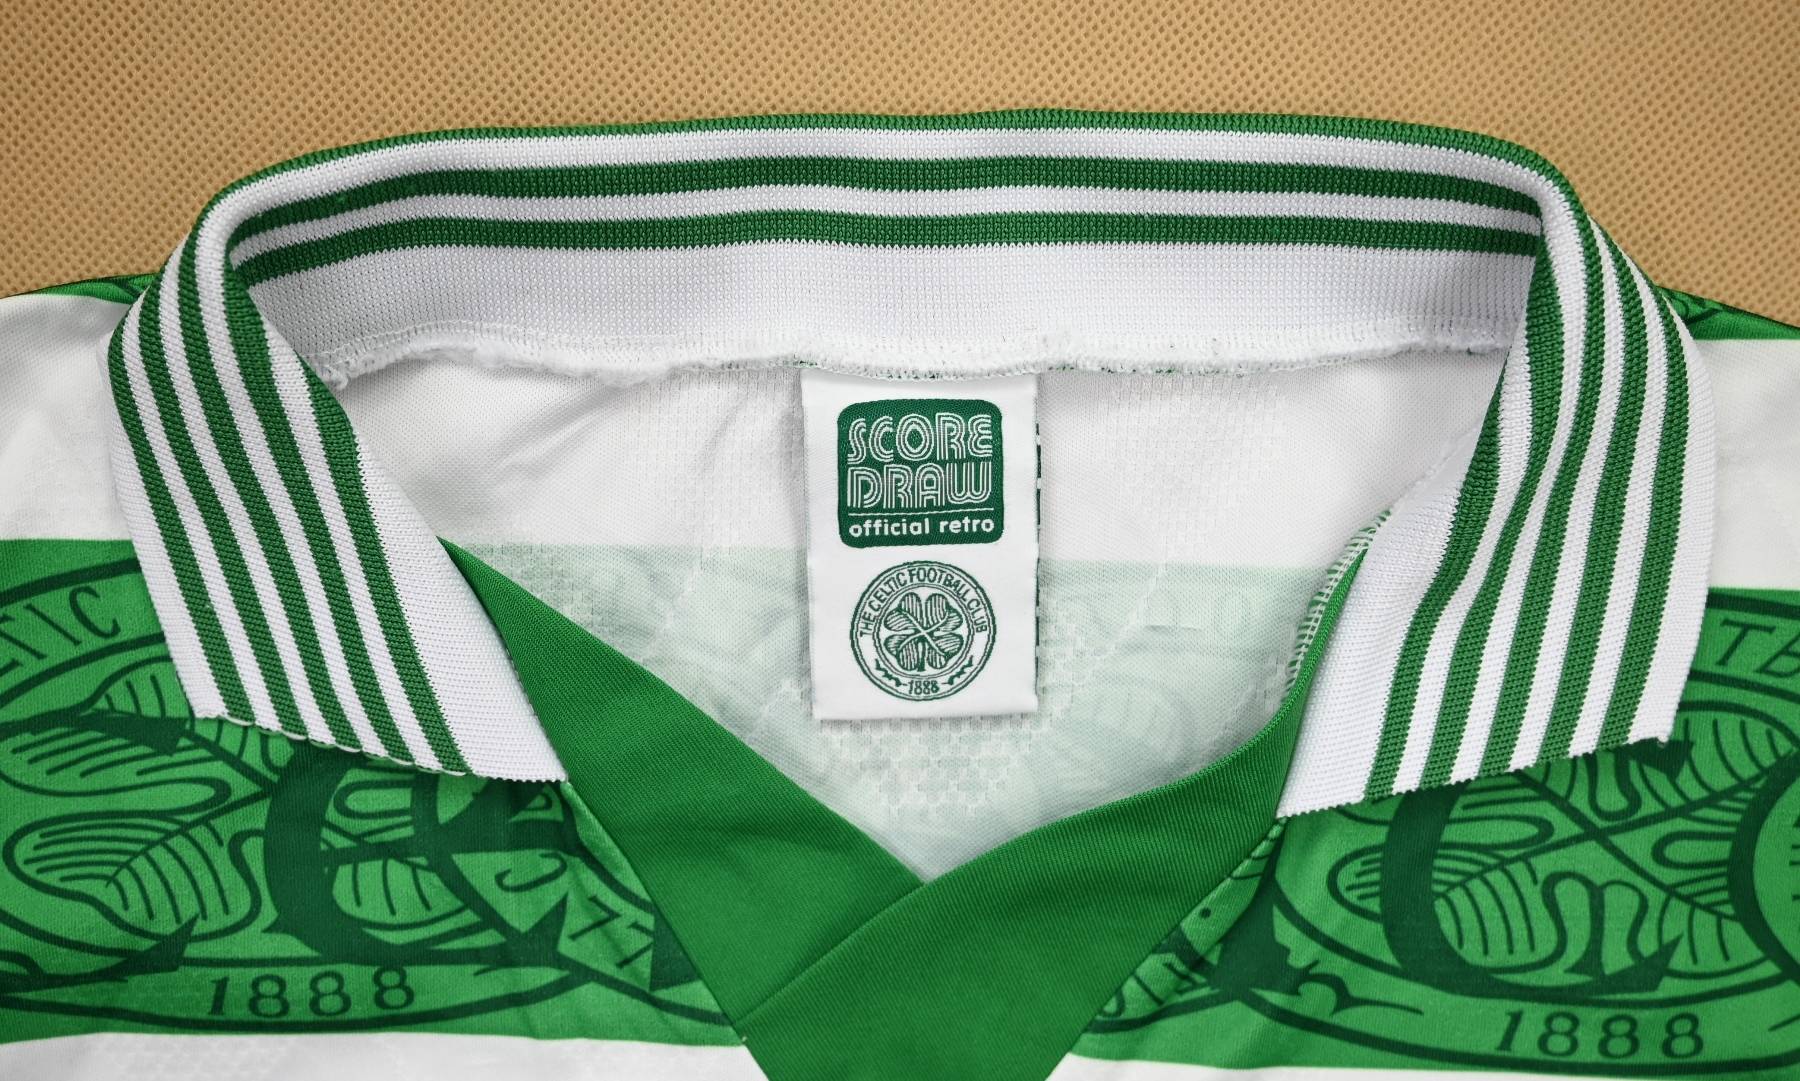 Celtic Home football shirt 1995 - 1997. Sponsored by CR Smith